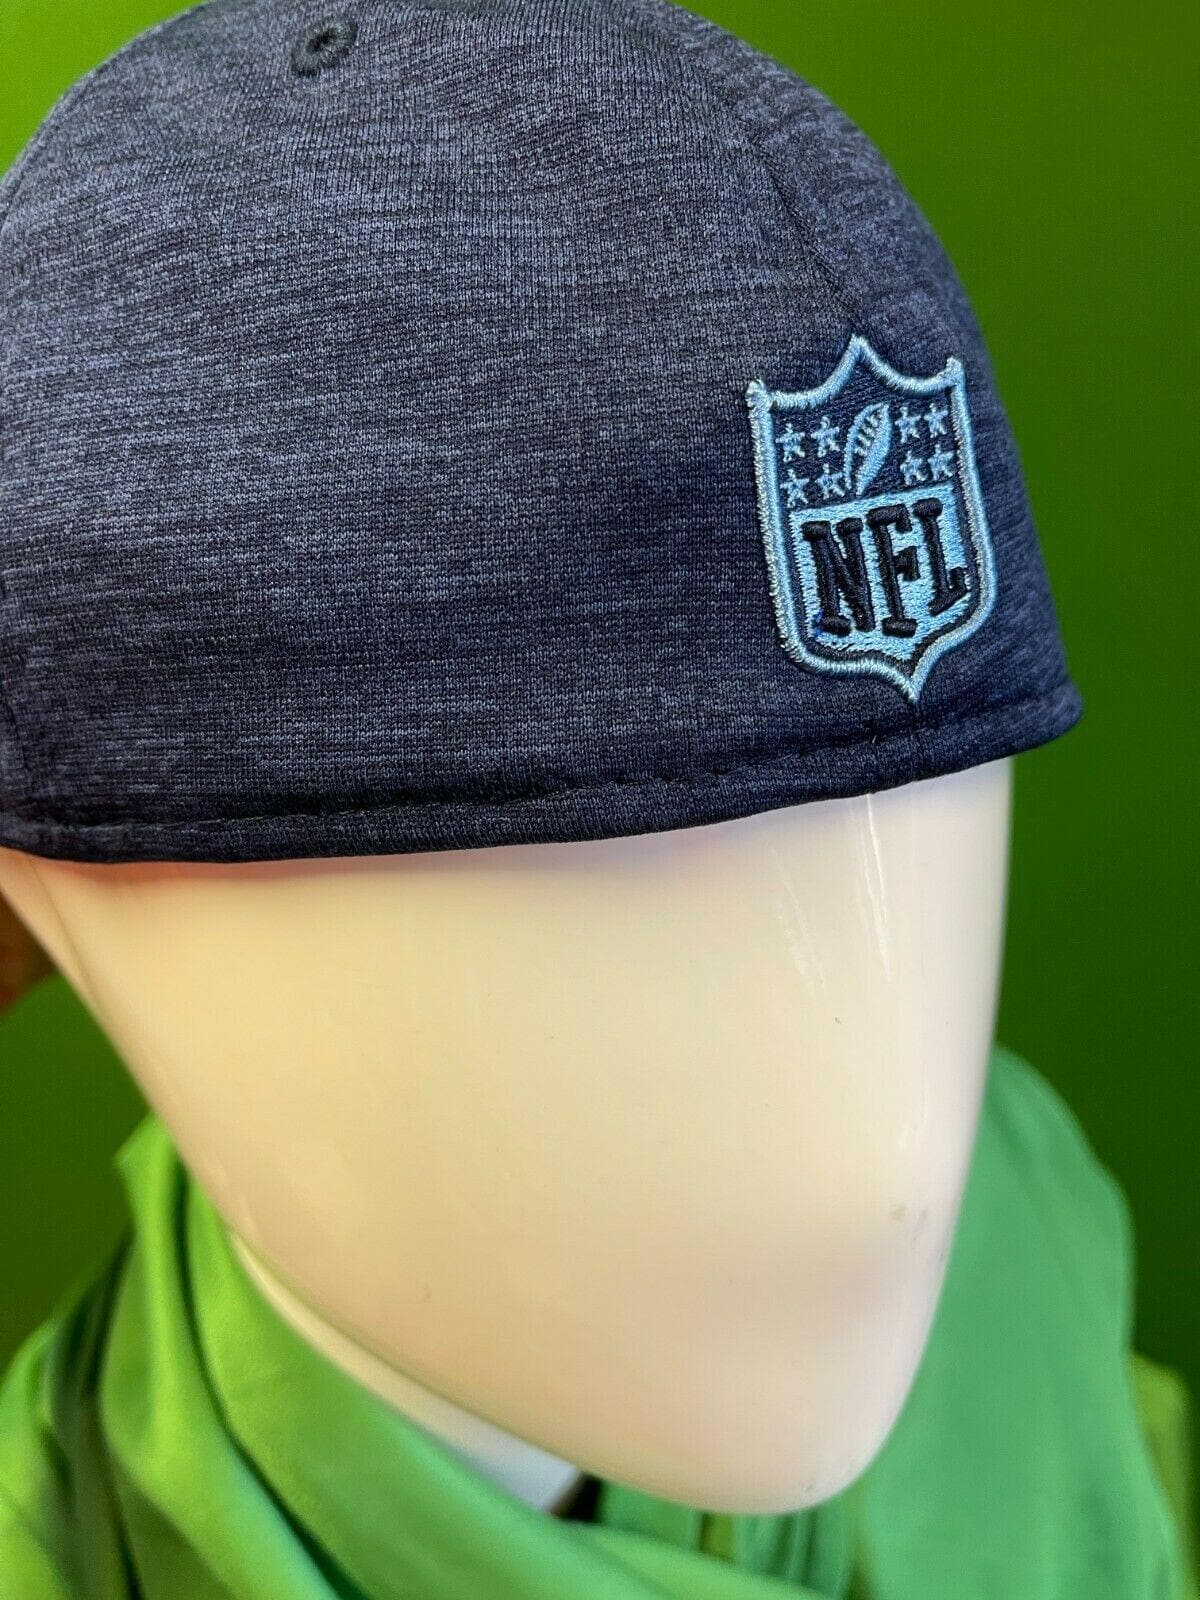 NFL Tennessee Titans New Era 39THIRTY Hat-Cap Medium-Large NWT